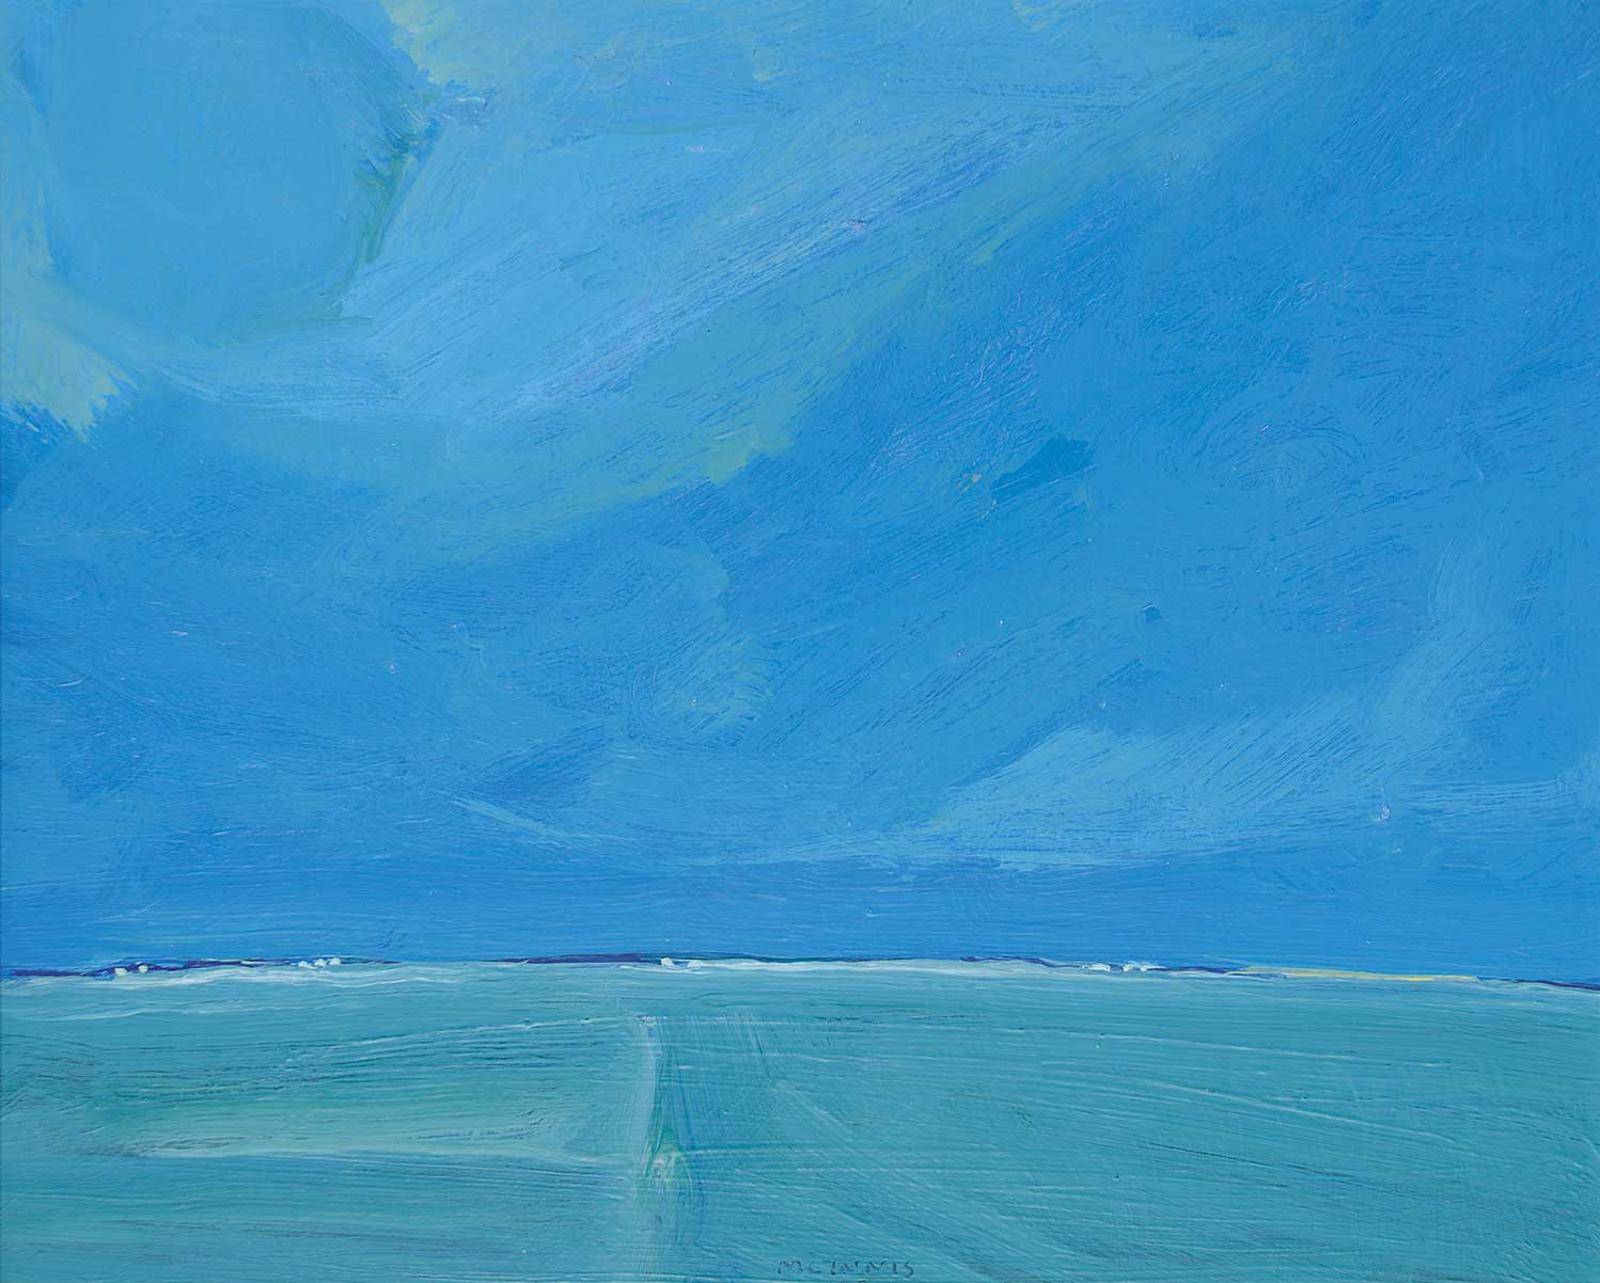 Robert F.M. McInnis (1942) - Untitled - Blue Sky, Southern Alberta